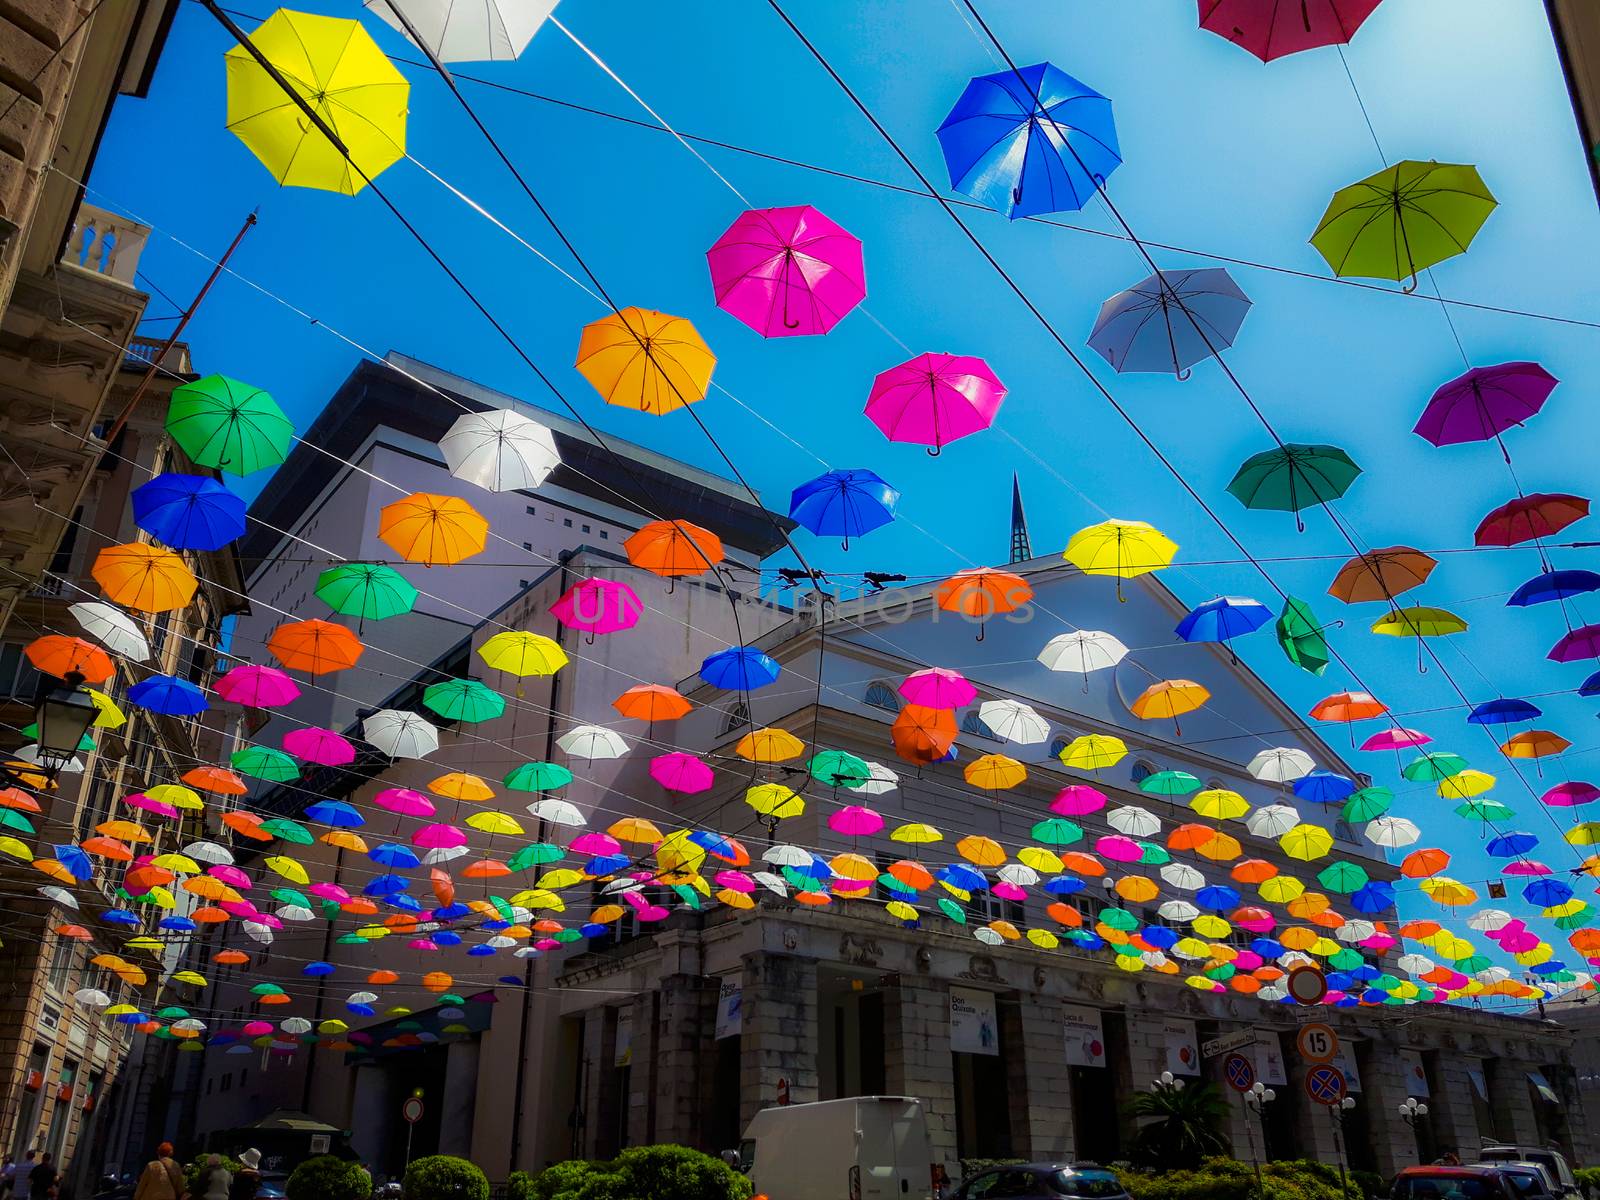 Coloured umbrellas over the city by yohananegusse